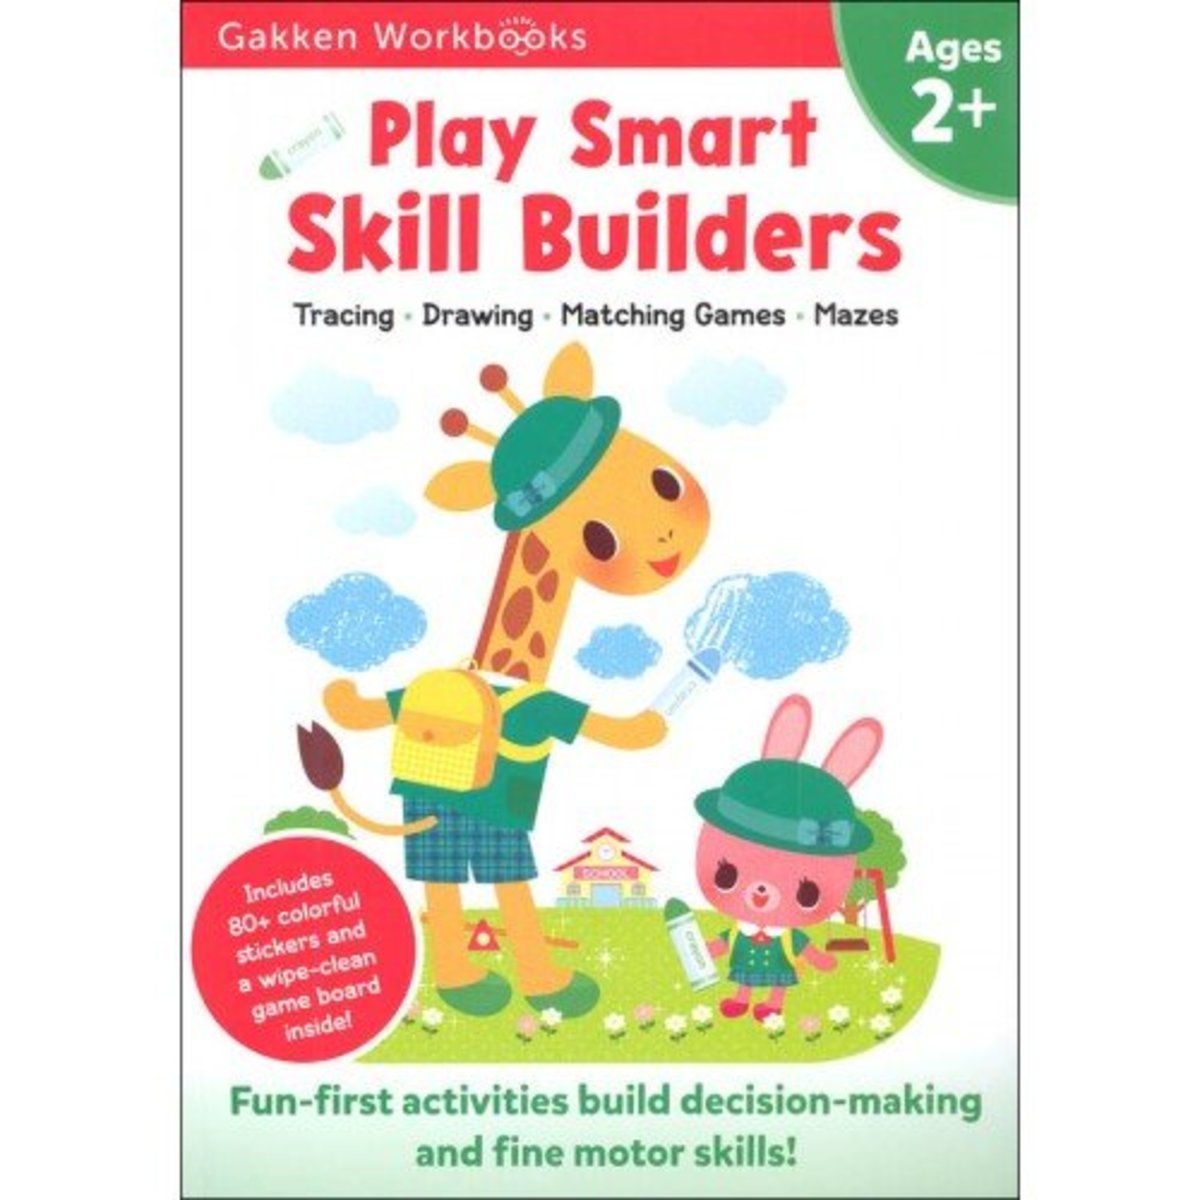 Gakken Play Smart Skill Builders Age 2+ Gakken Workbook Play Smart Skill Builders Age 2+ Gakken Workbook